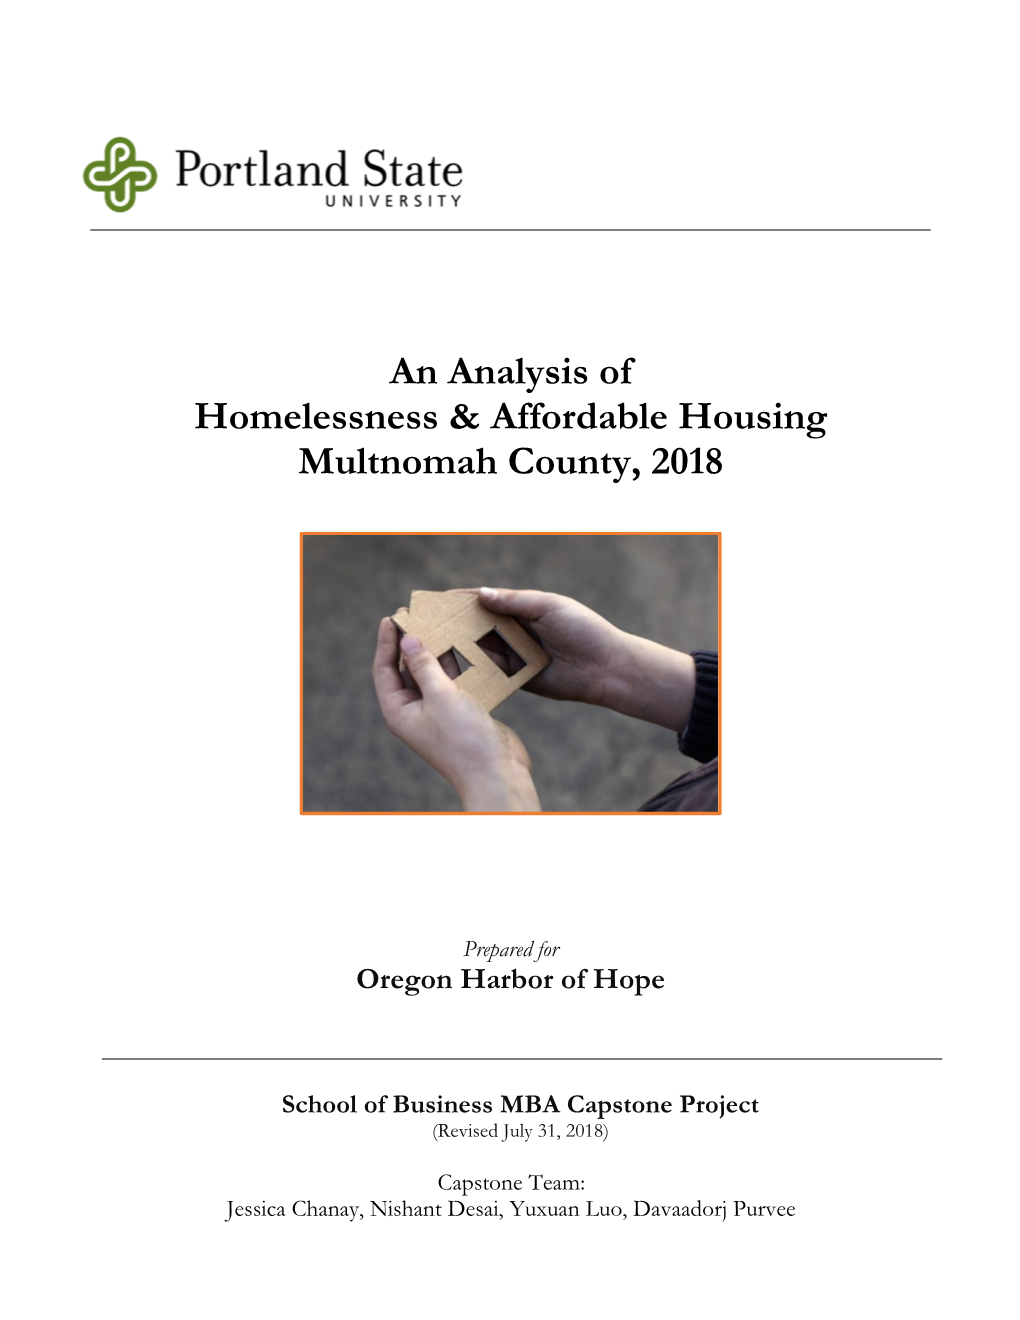 An Analysis of Homelessness & Affordable Housing Multnomah